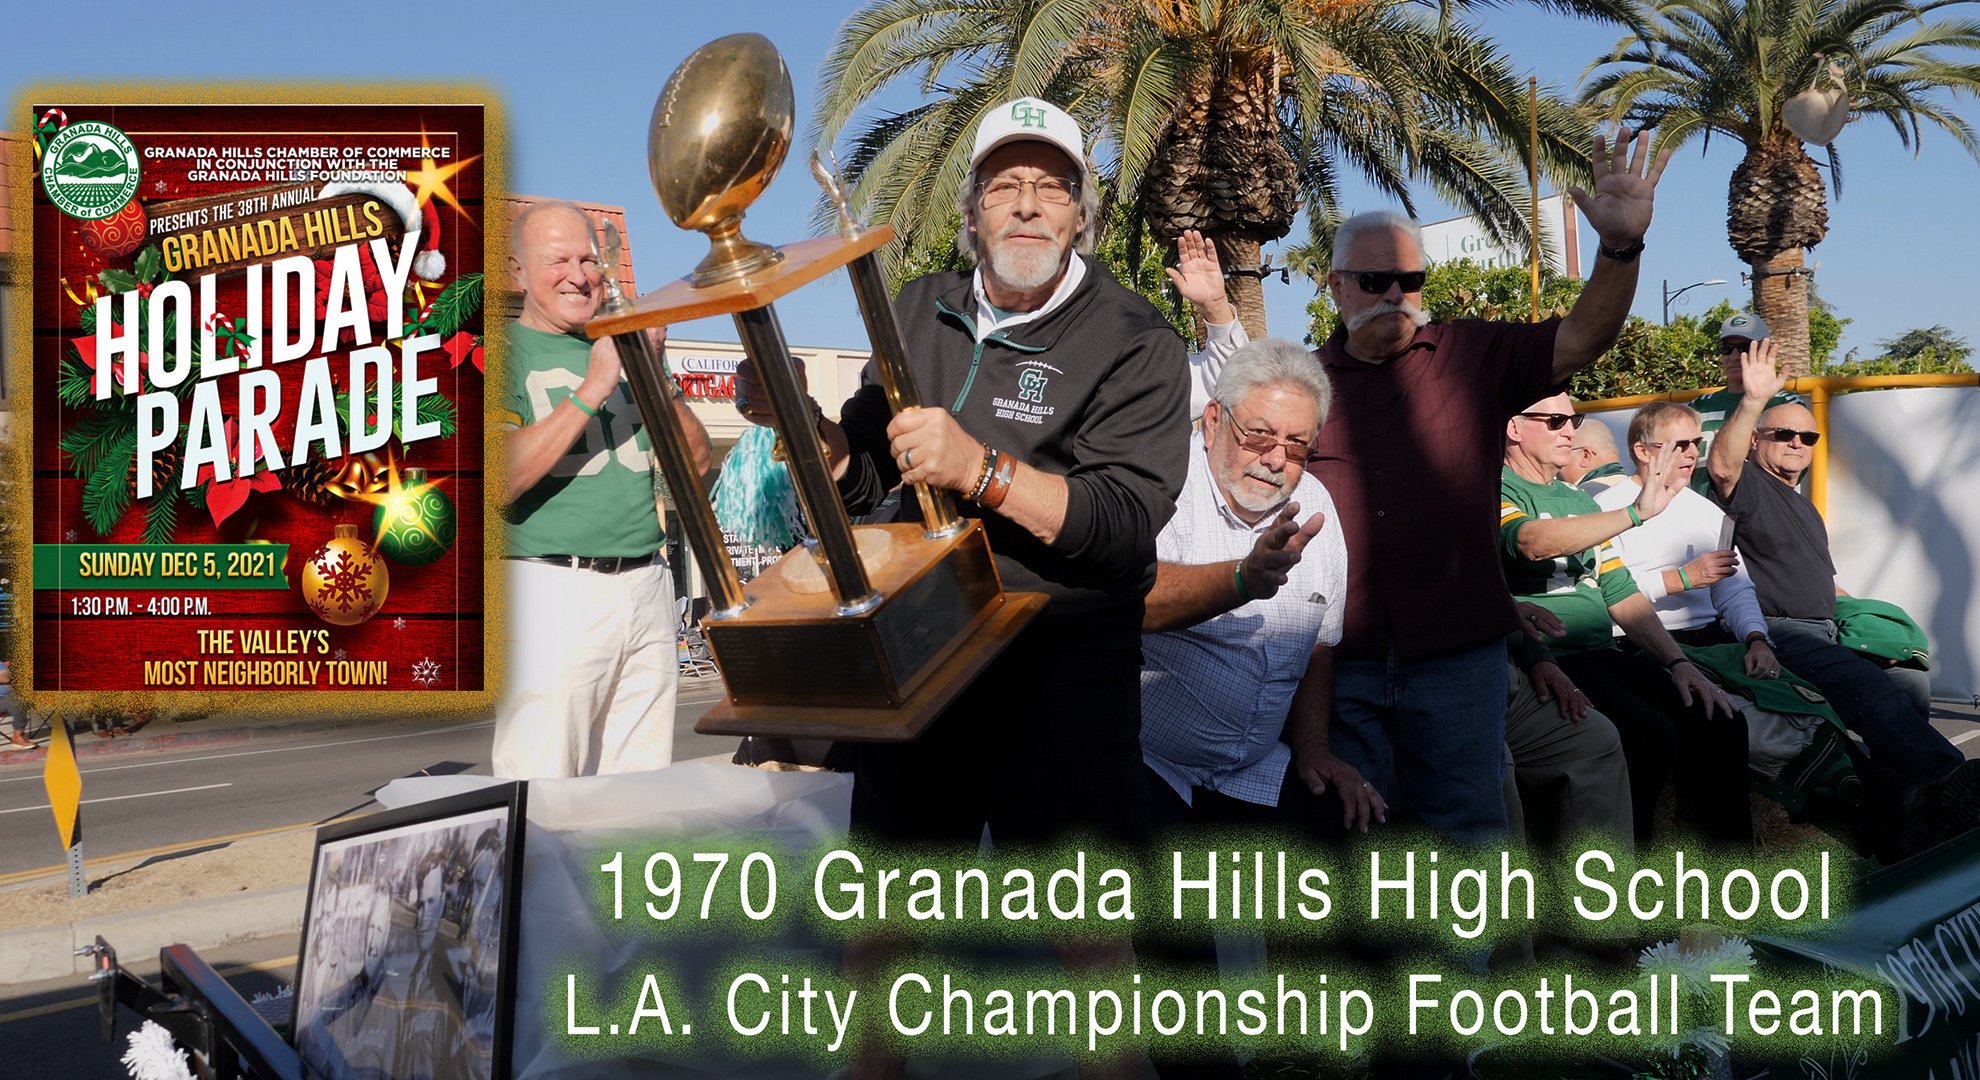 VIDEO: 38th Annual Granada Hills Holiday Parade